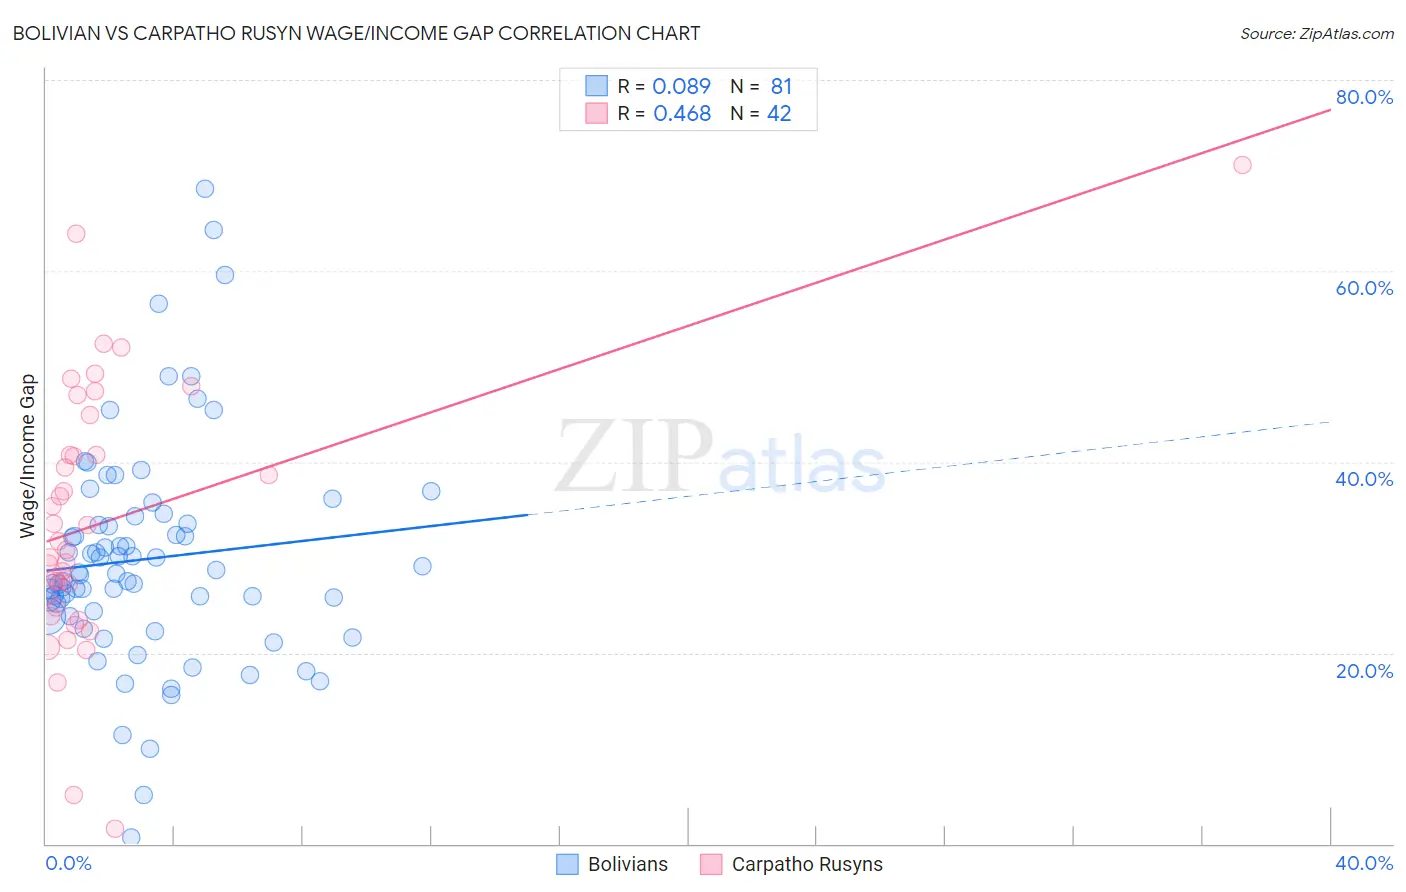 Bolivian vs Carpatho Rusyn Wage/Income Gap